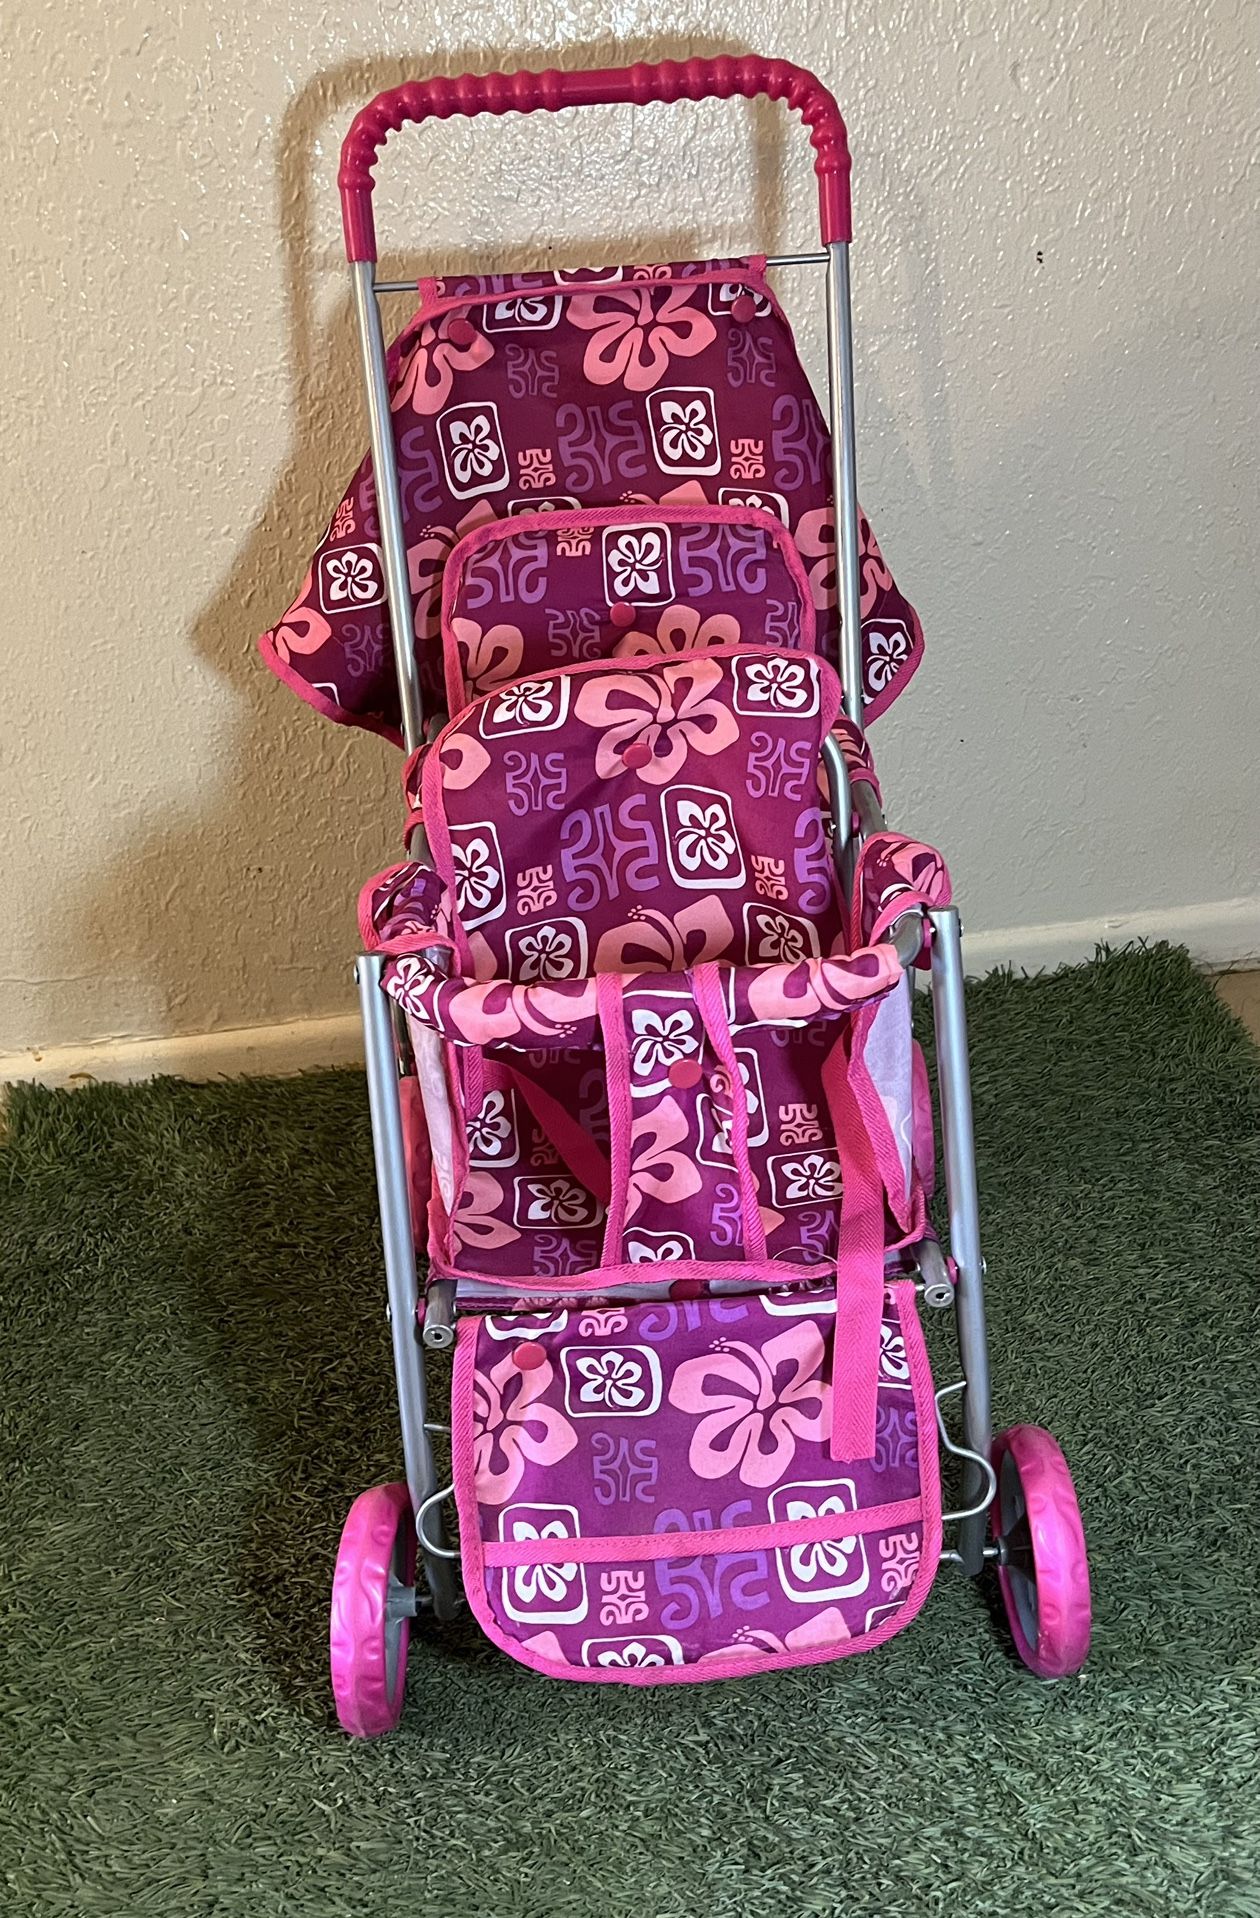 Baby Stroller Toy Pink : Carriola De Niñas (color rosa)